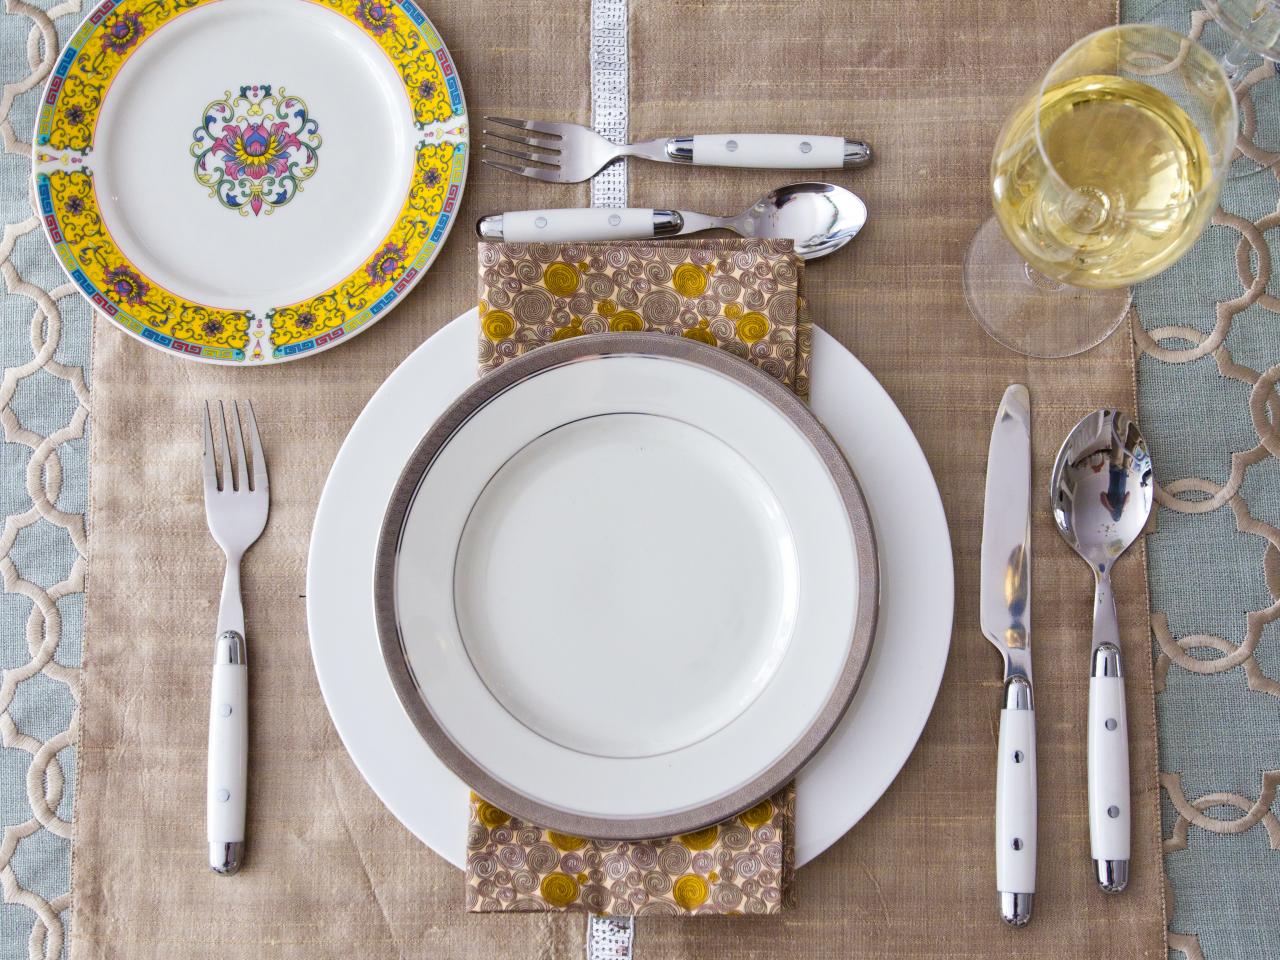 Ставить тарелку на стол. Сервировка стола к ужину. Сервировка стола к обеду. Красивая посуда на столе. Правильная сервировка стола.